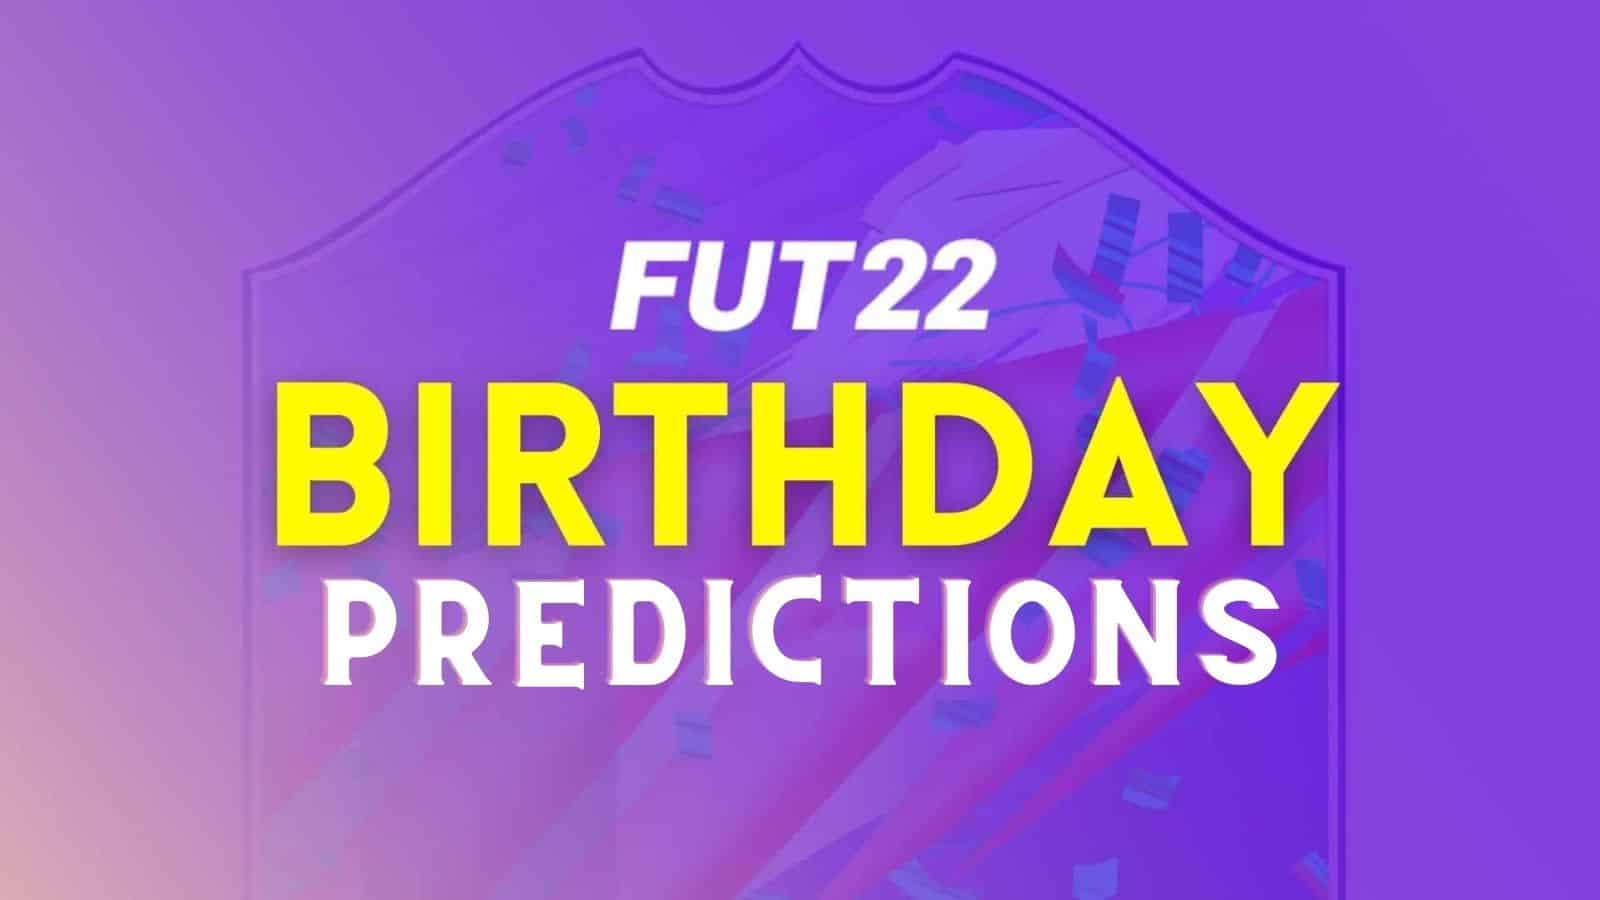 FIFA 22 FUT Birthday Team 2 revealed: Dani Alves, Neuer, Dybala